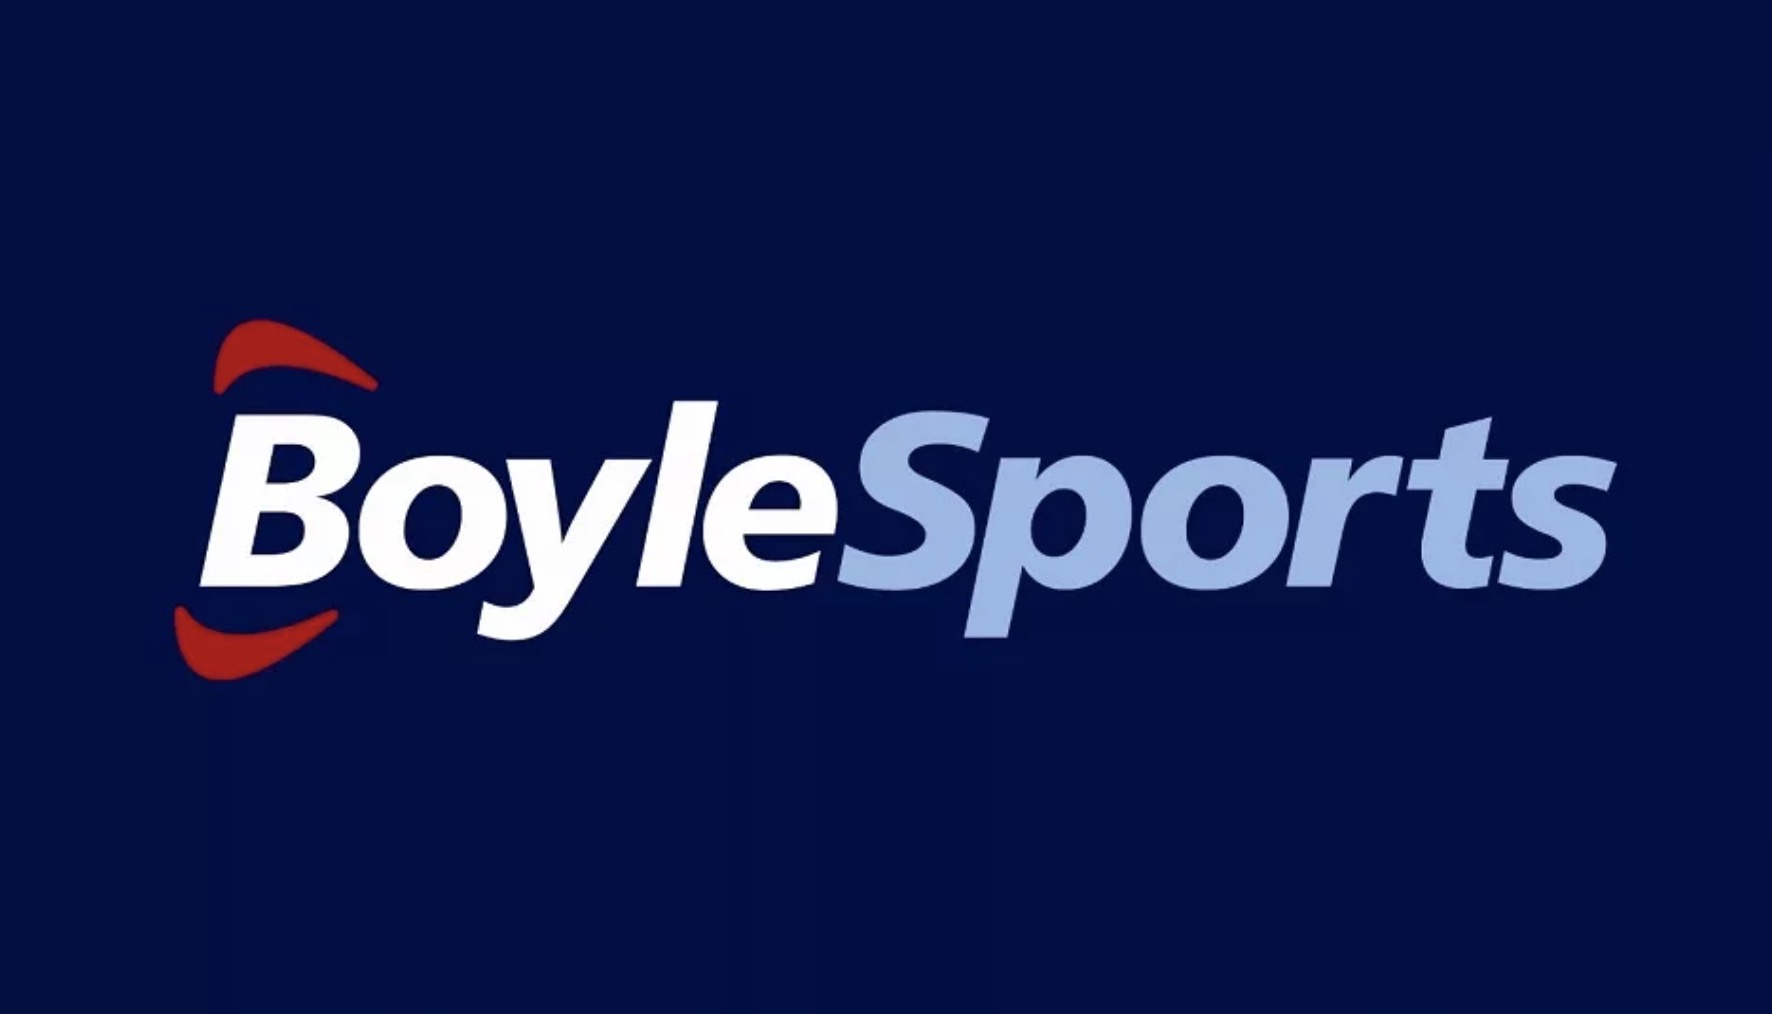 BoyleSports Sister Sites